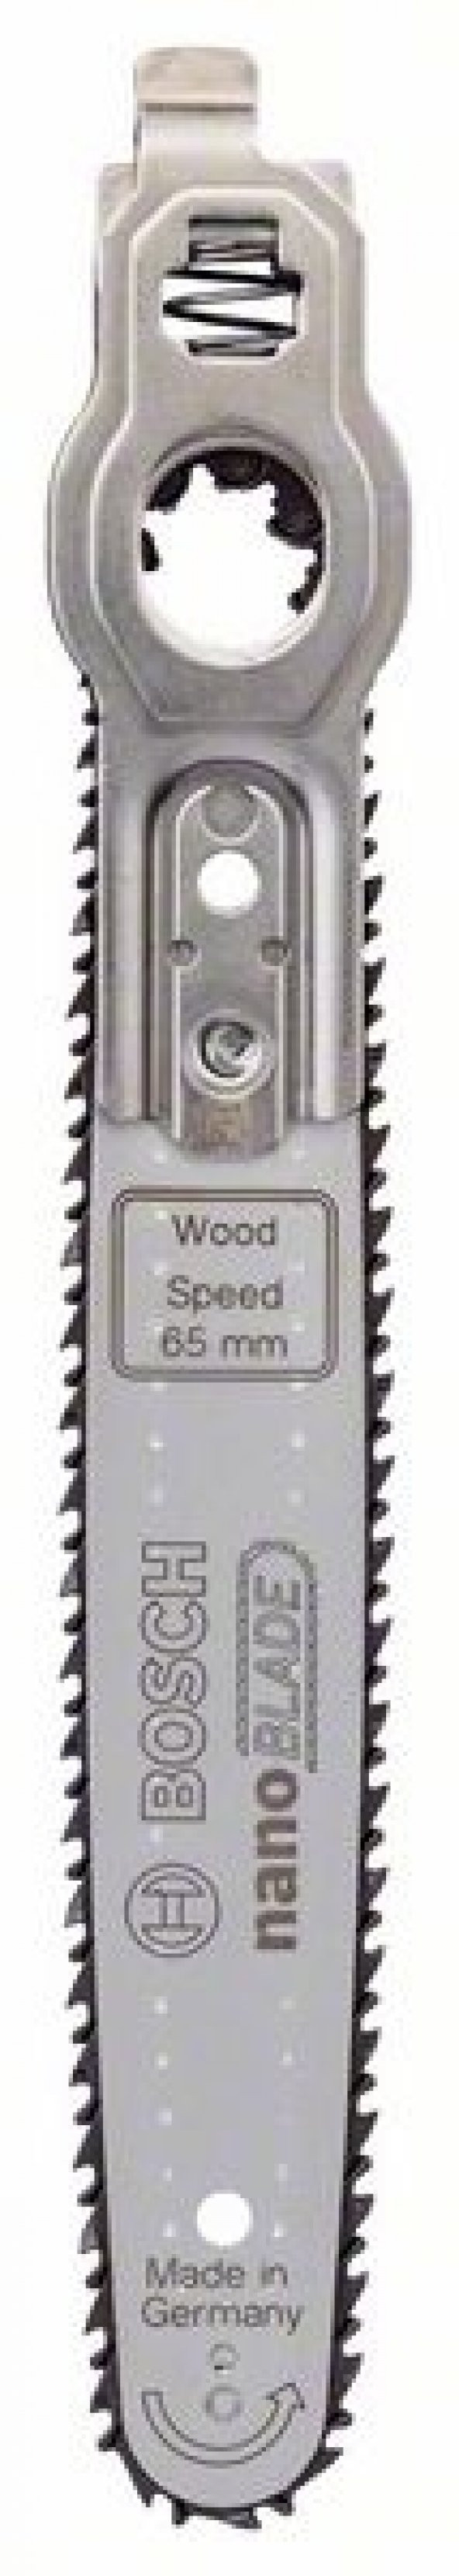 EasyCut 12 nanoBLADE Wood Speed 65-2.609.256.D86